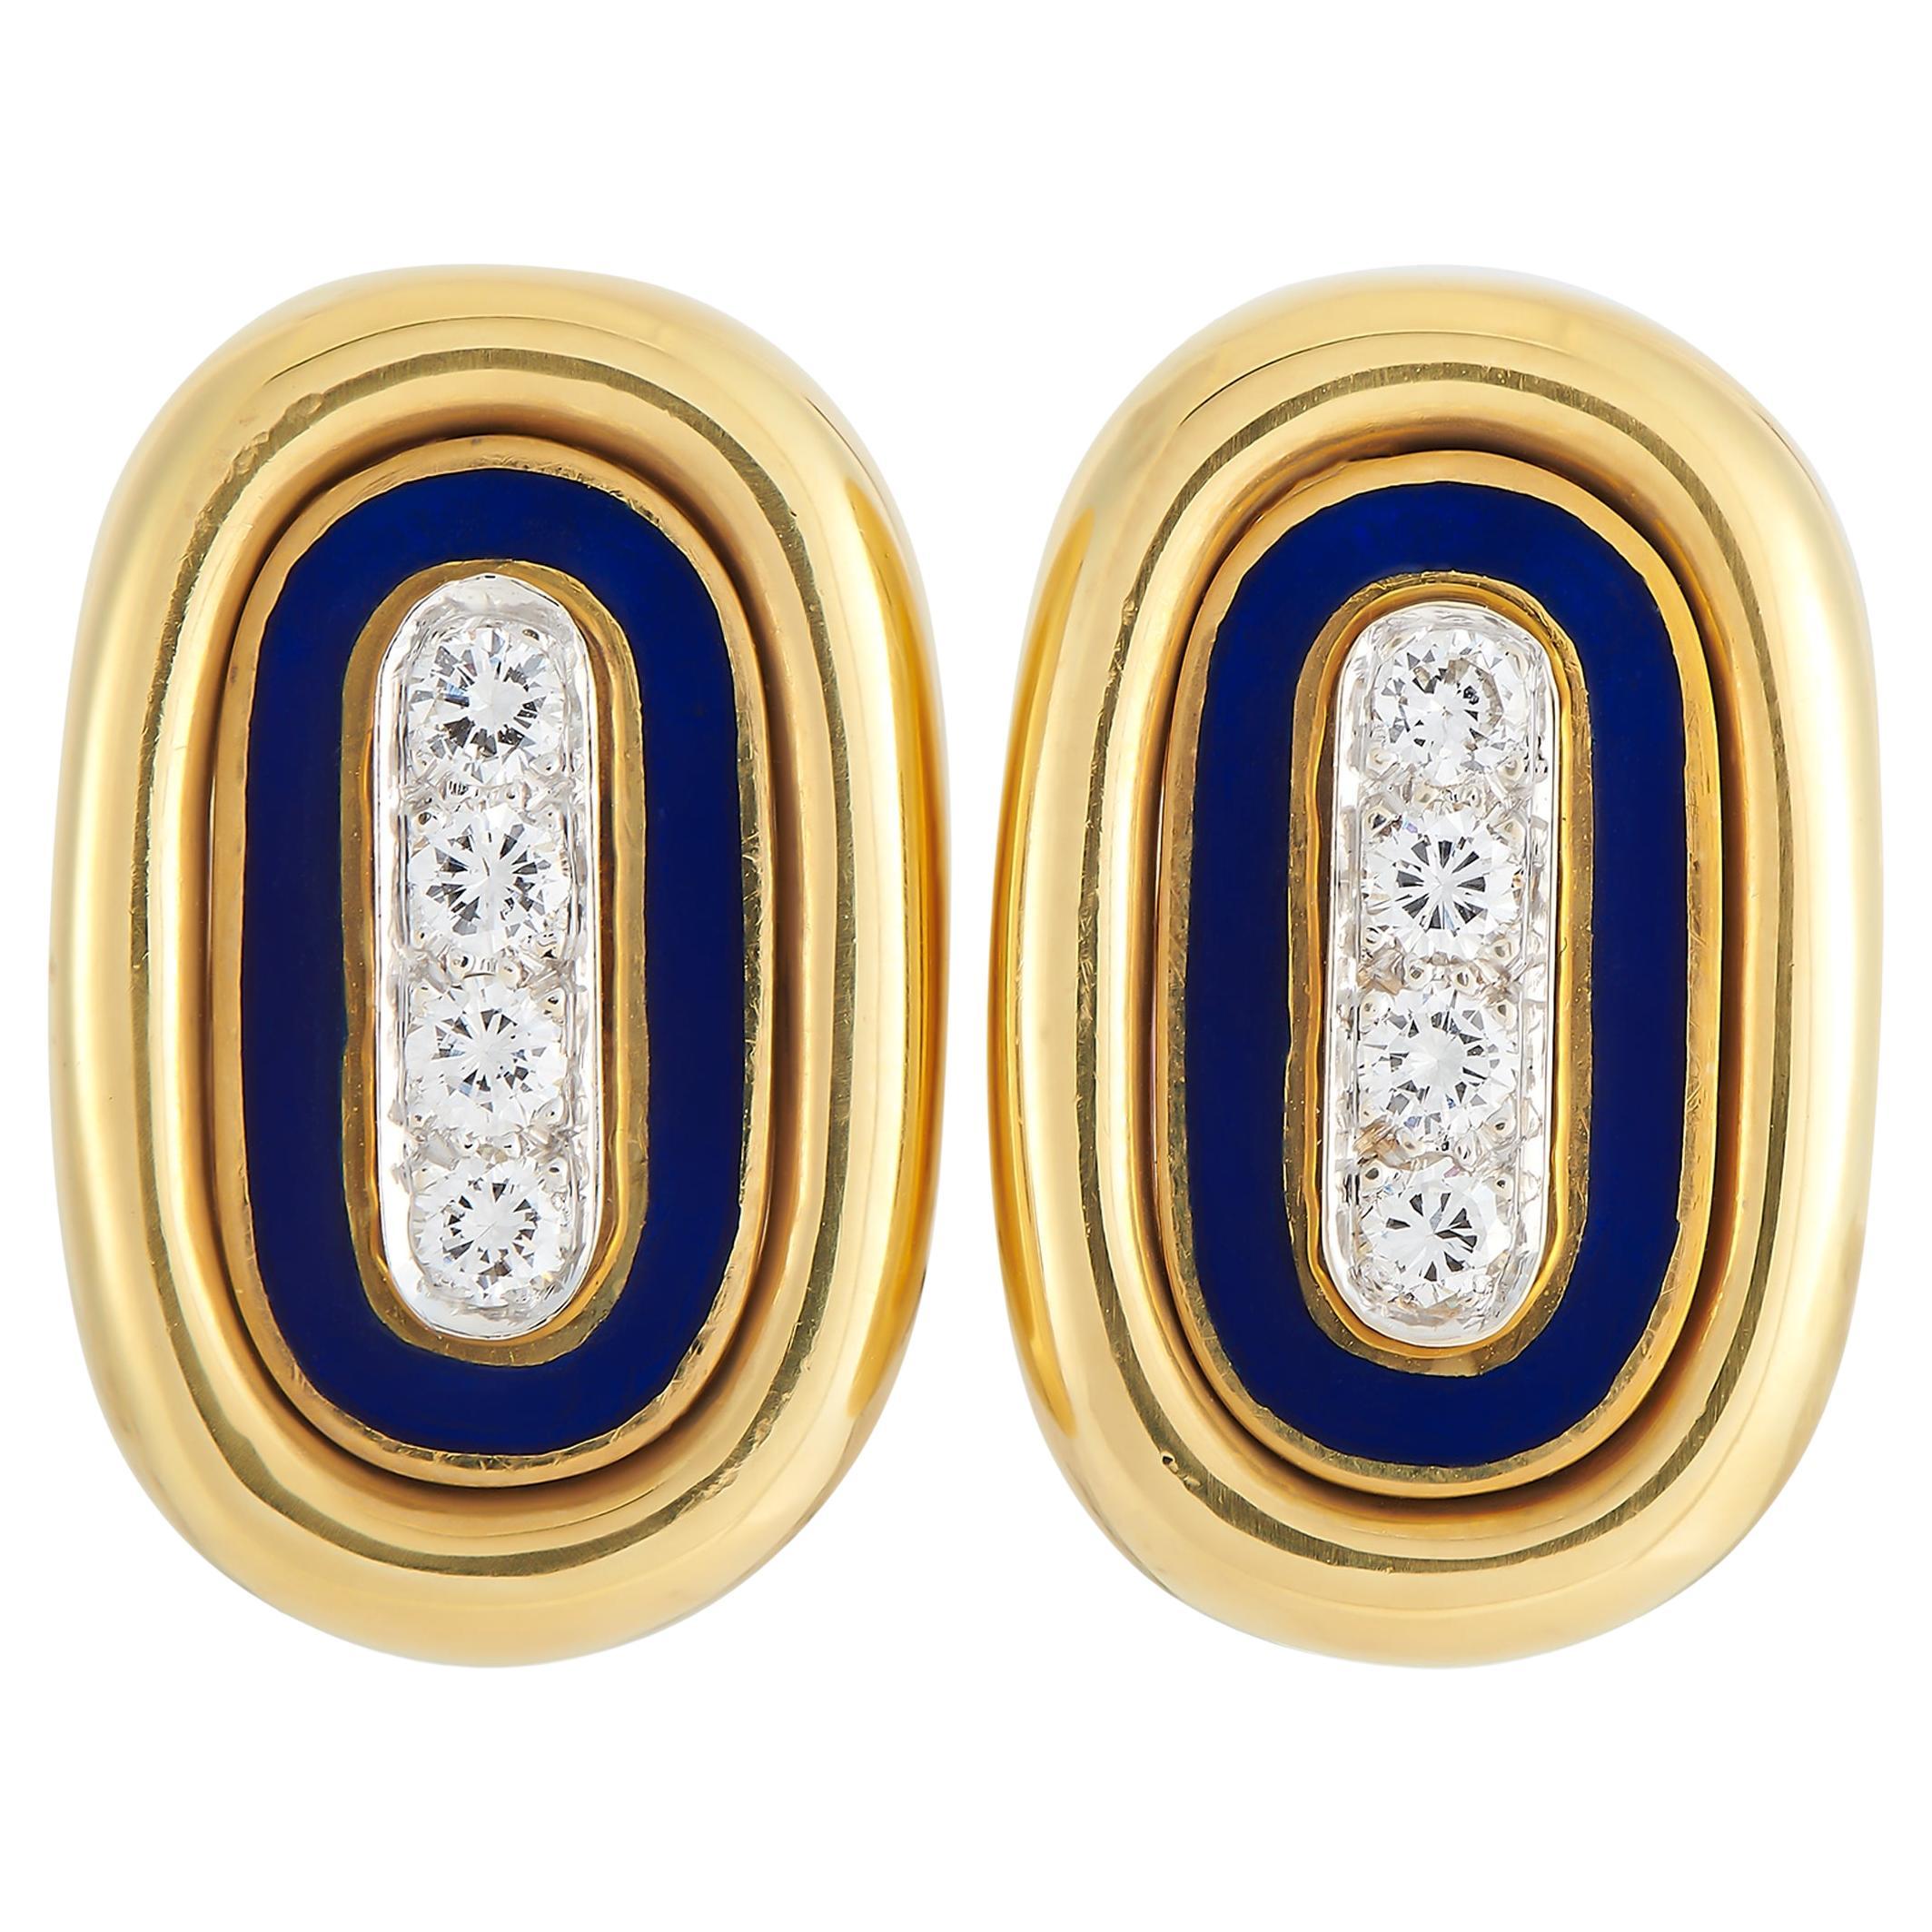 Boris Lebeau 18K Yellow Gold 0.55 Ct Diamond and Enamel Clip-On Earrings For Sale